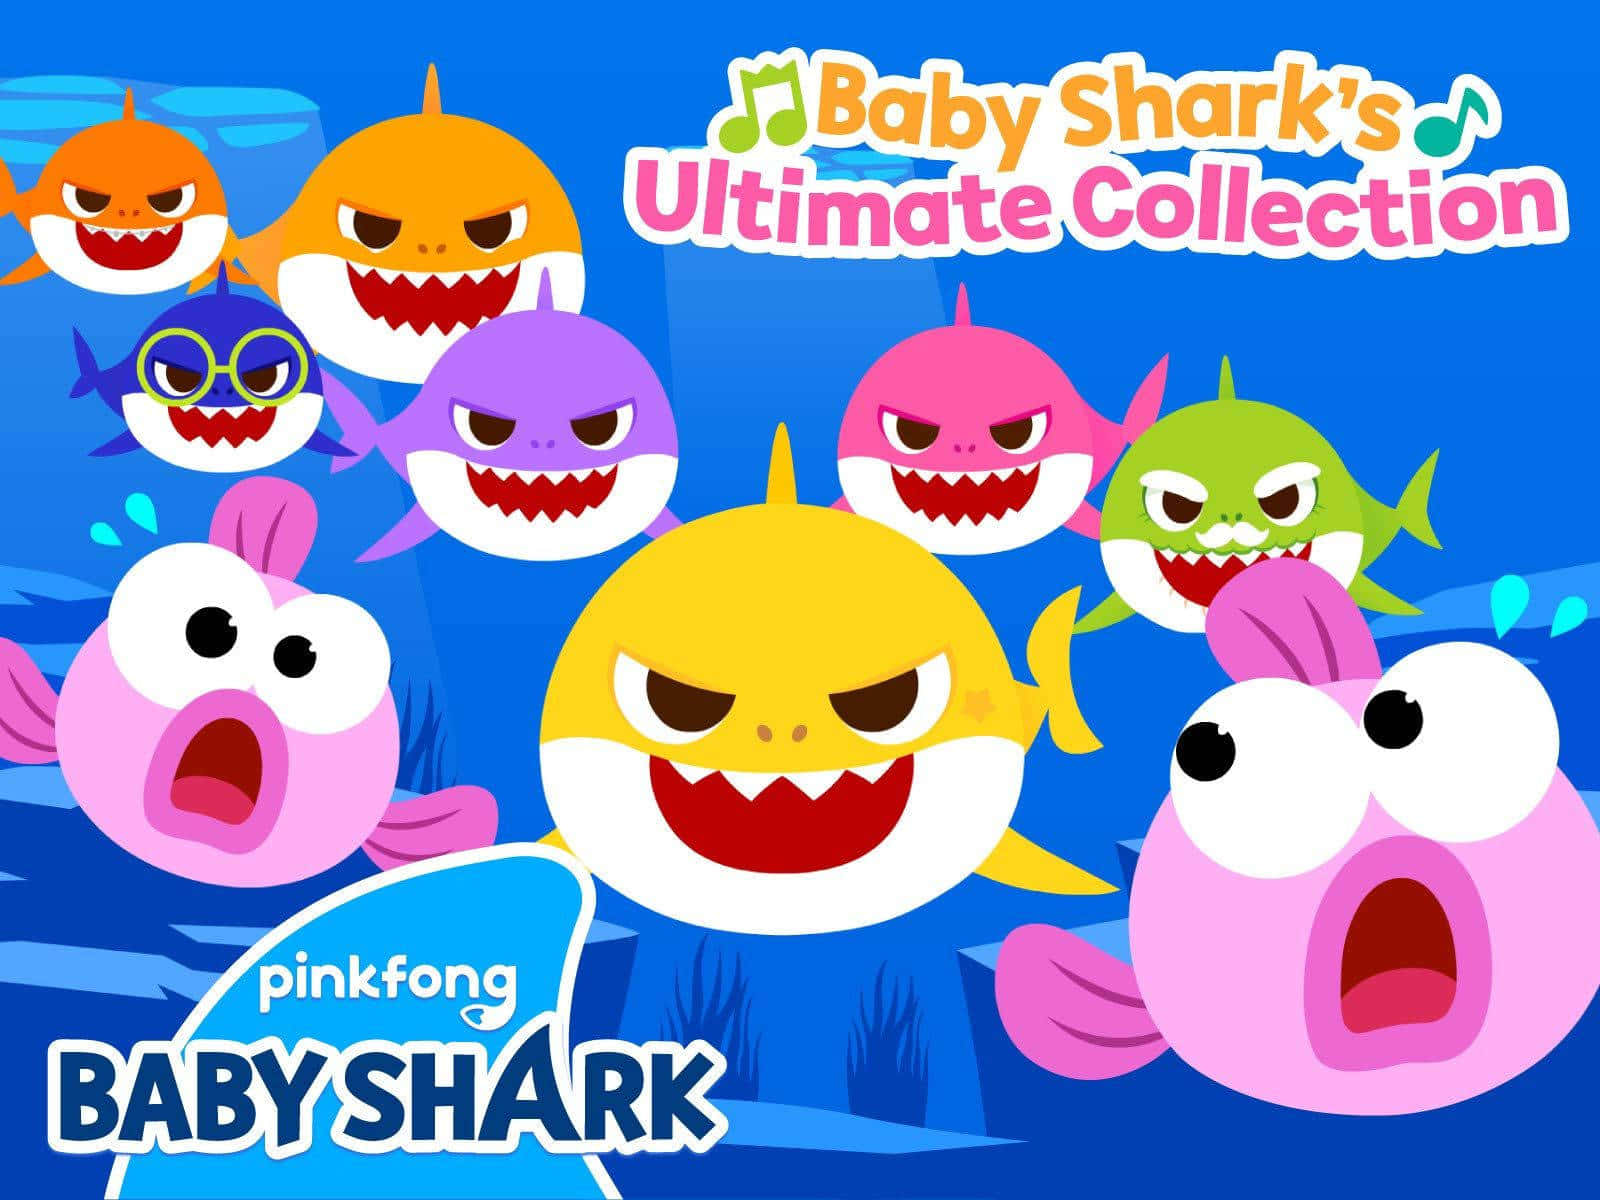 Babyshark Hintergrund Ultimate Collection Album Cover